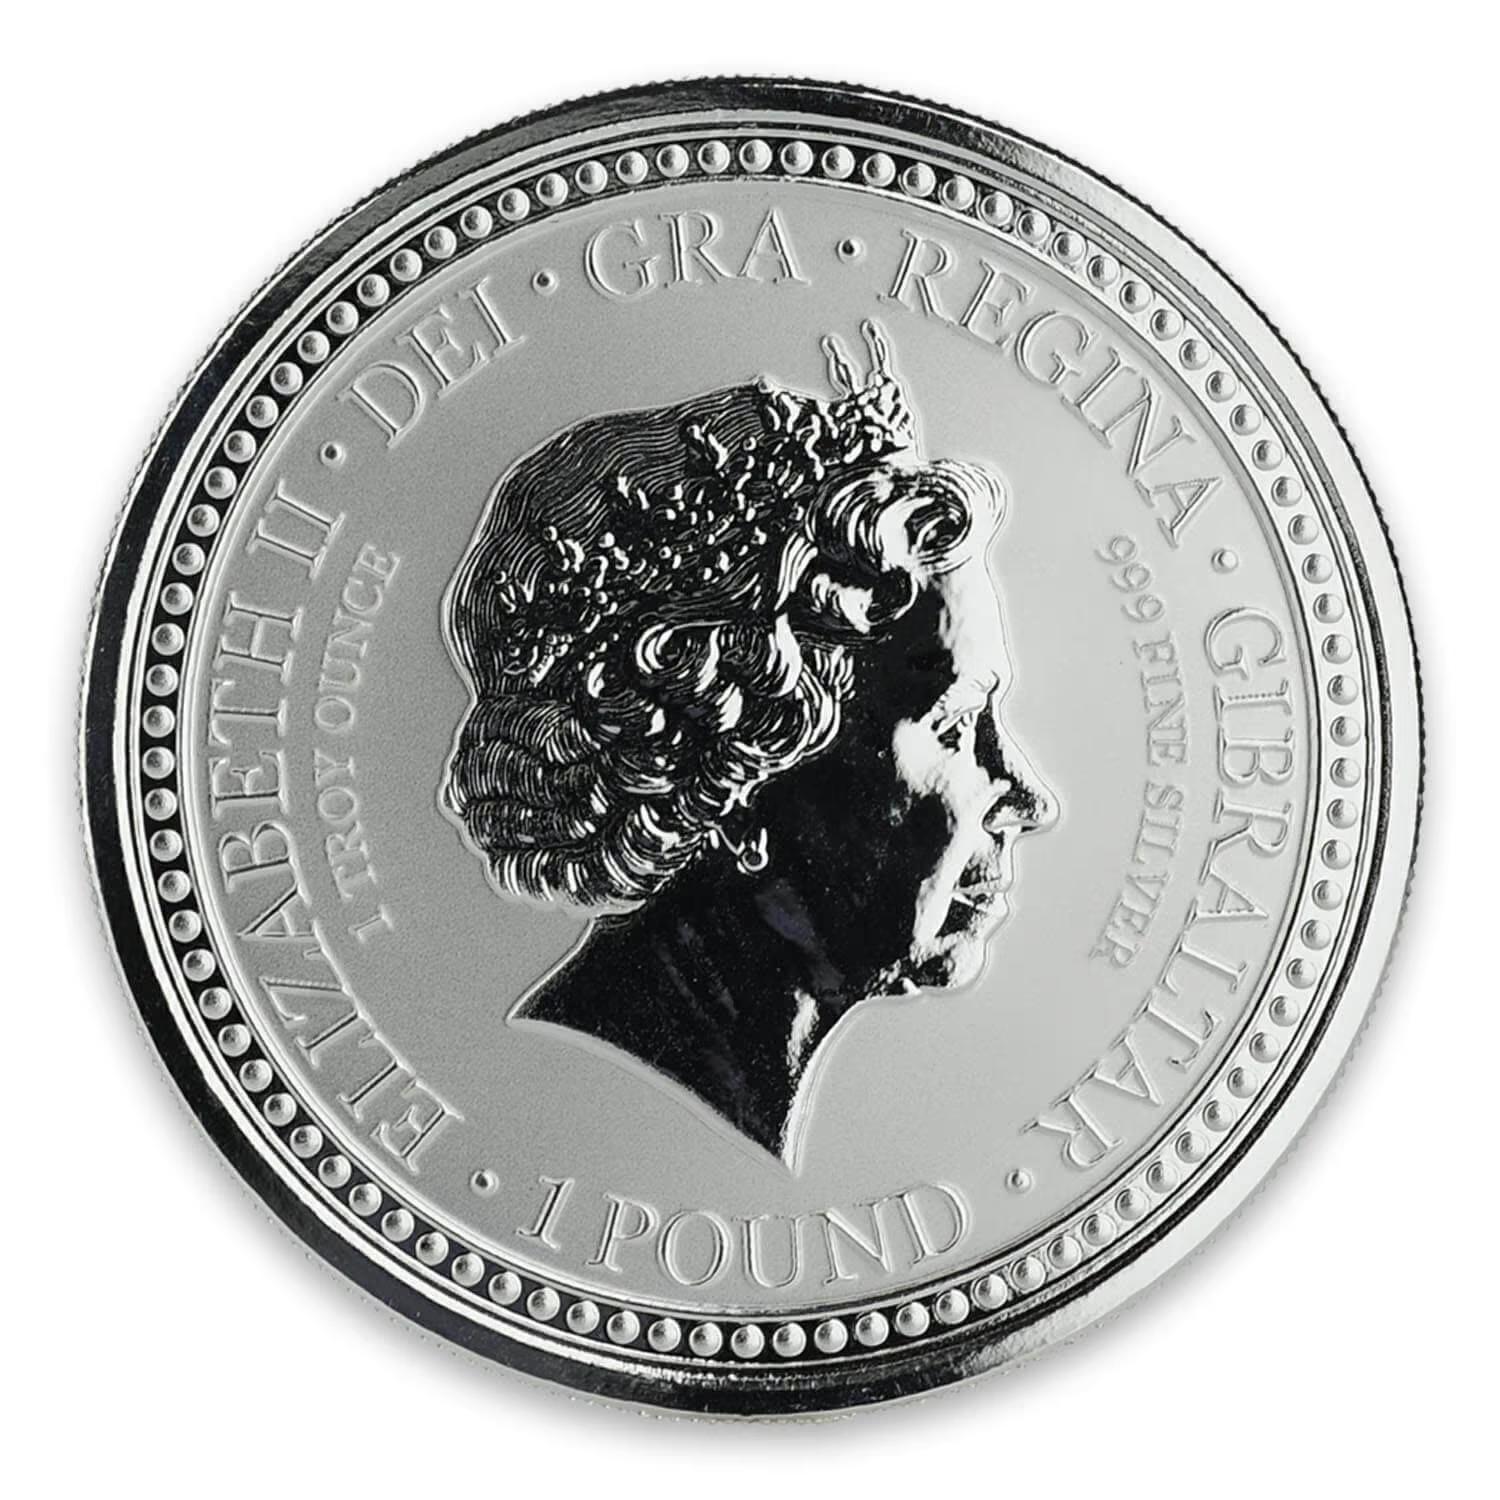 1 Oz Silver Coin 2018 Gibraltar £2 Royal Arms of England Color Proof - Red-classypw.com-4